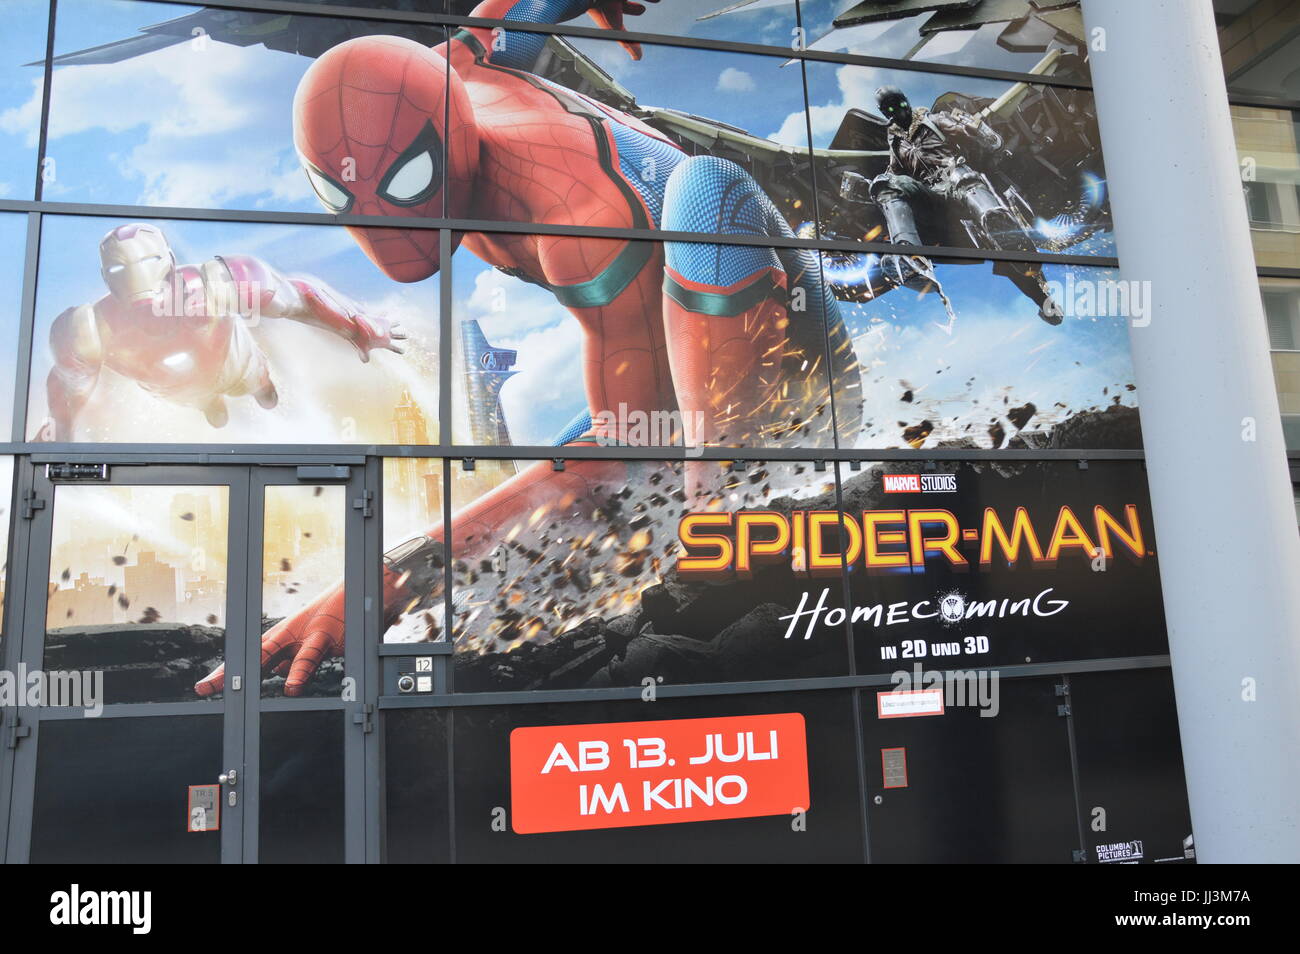 Berlin, Allemagne. Juil 18, 2017. Spider-man - Homecoming' film maintenant aussi à Berlin, Allemagne Crédit : Markku Rainer Peltonen/Alamy Live News Banque D'Images